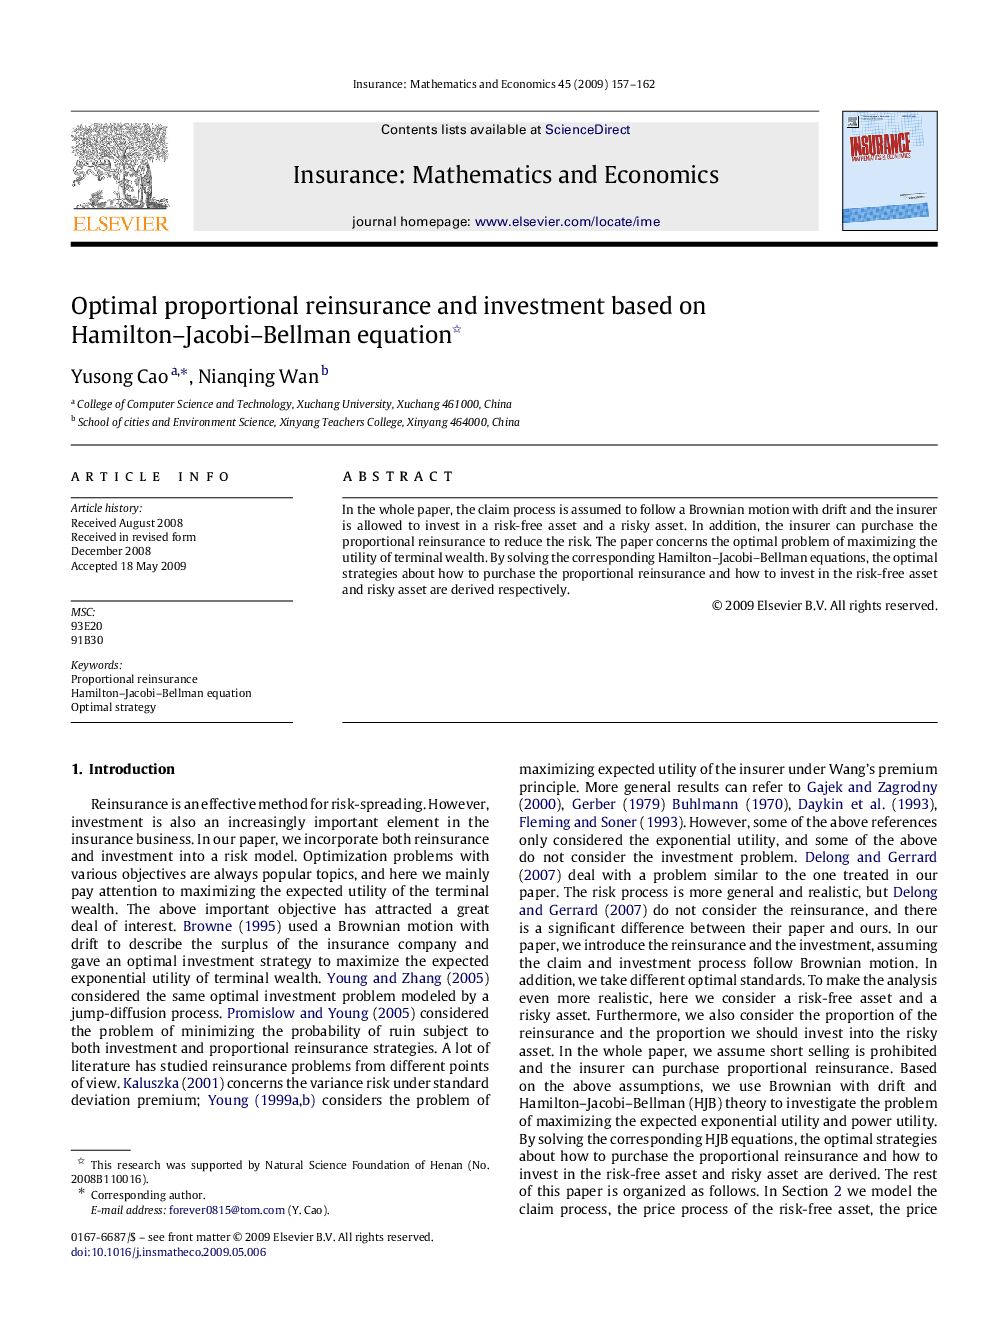 Optimal proportional reinsurance and investment based on Hamilton-Jacobi-Bellman equation